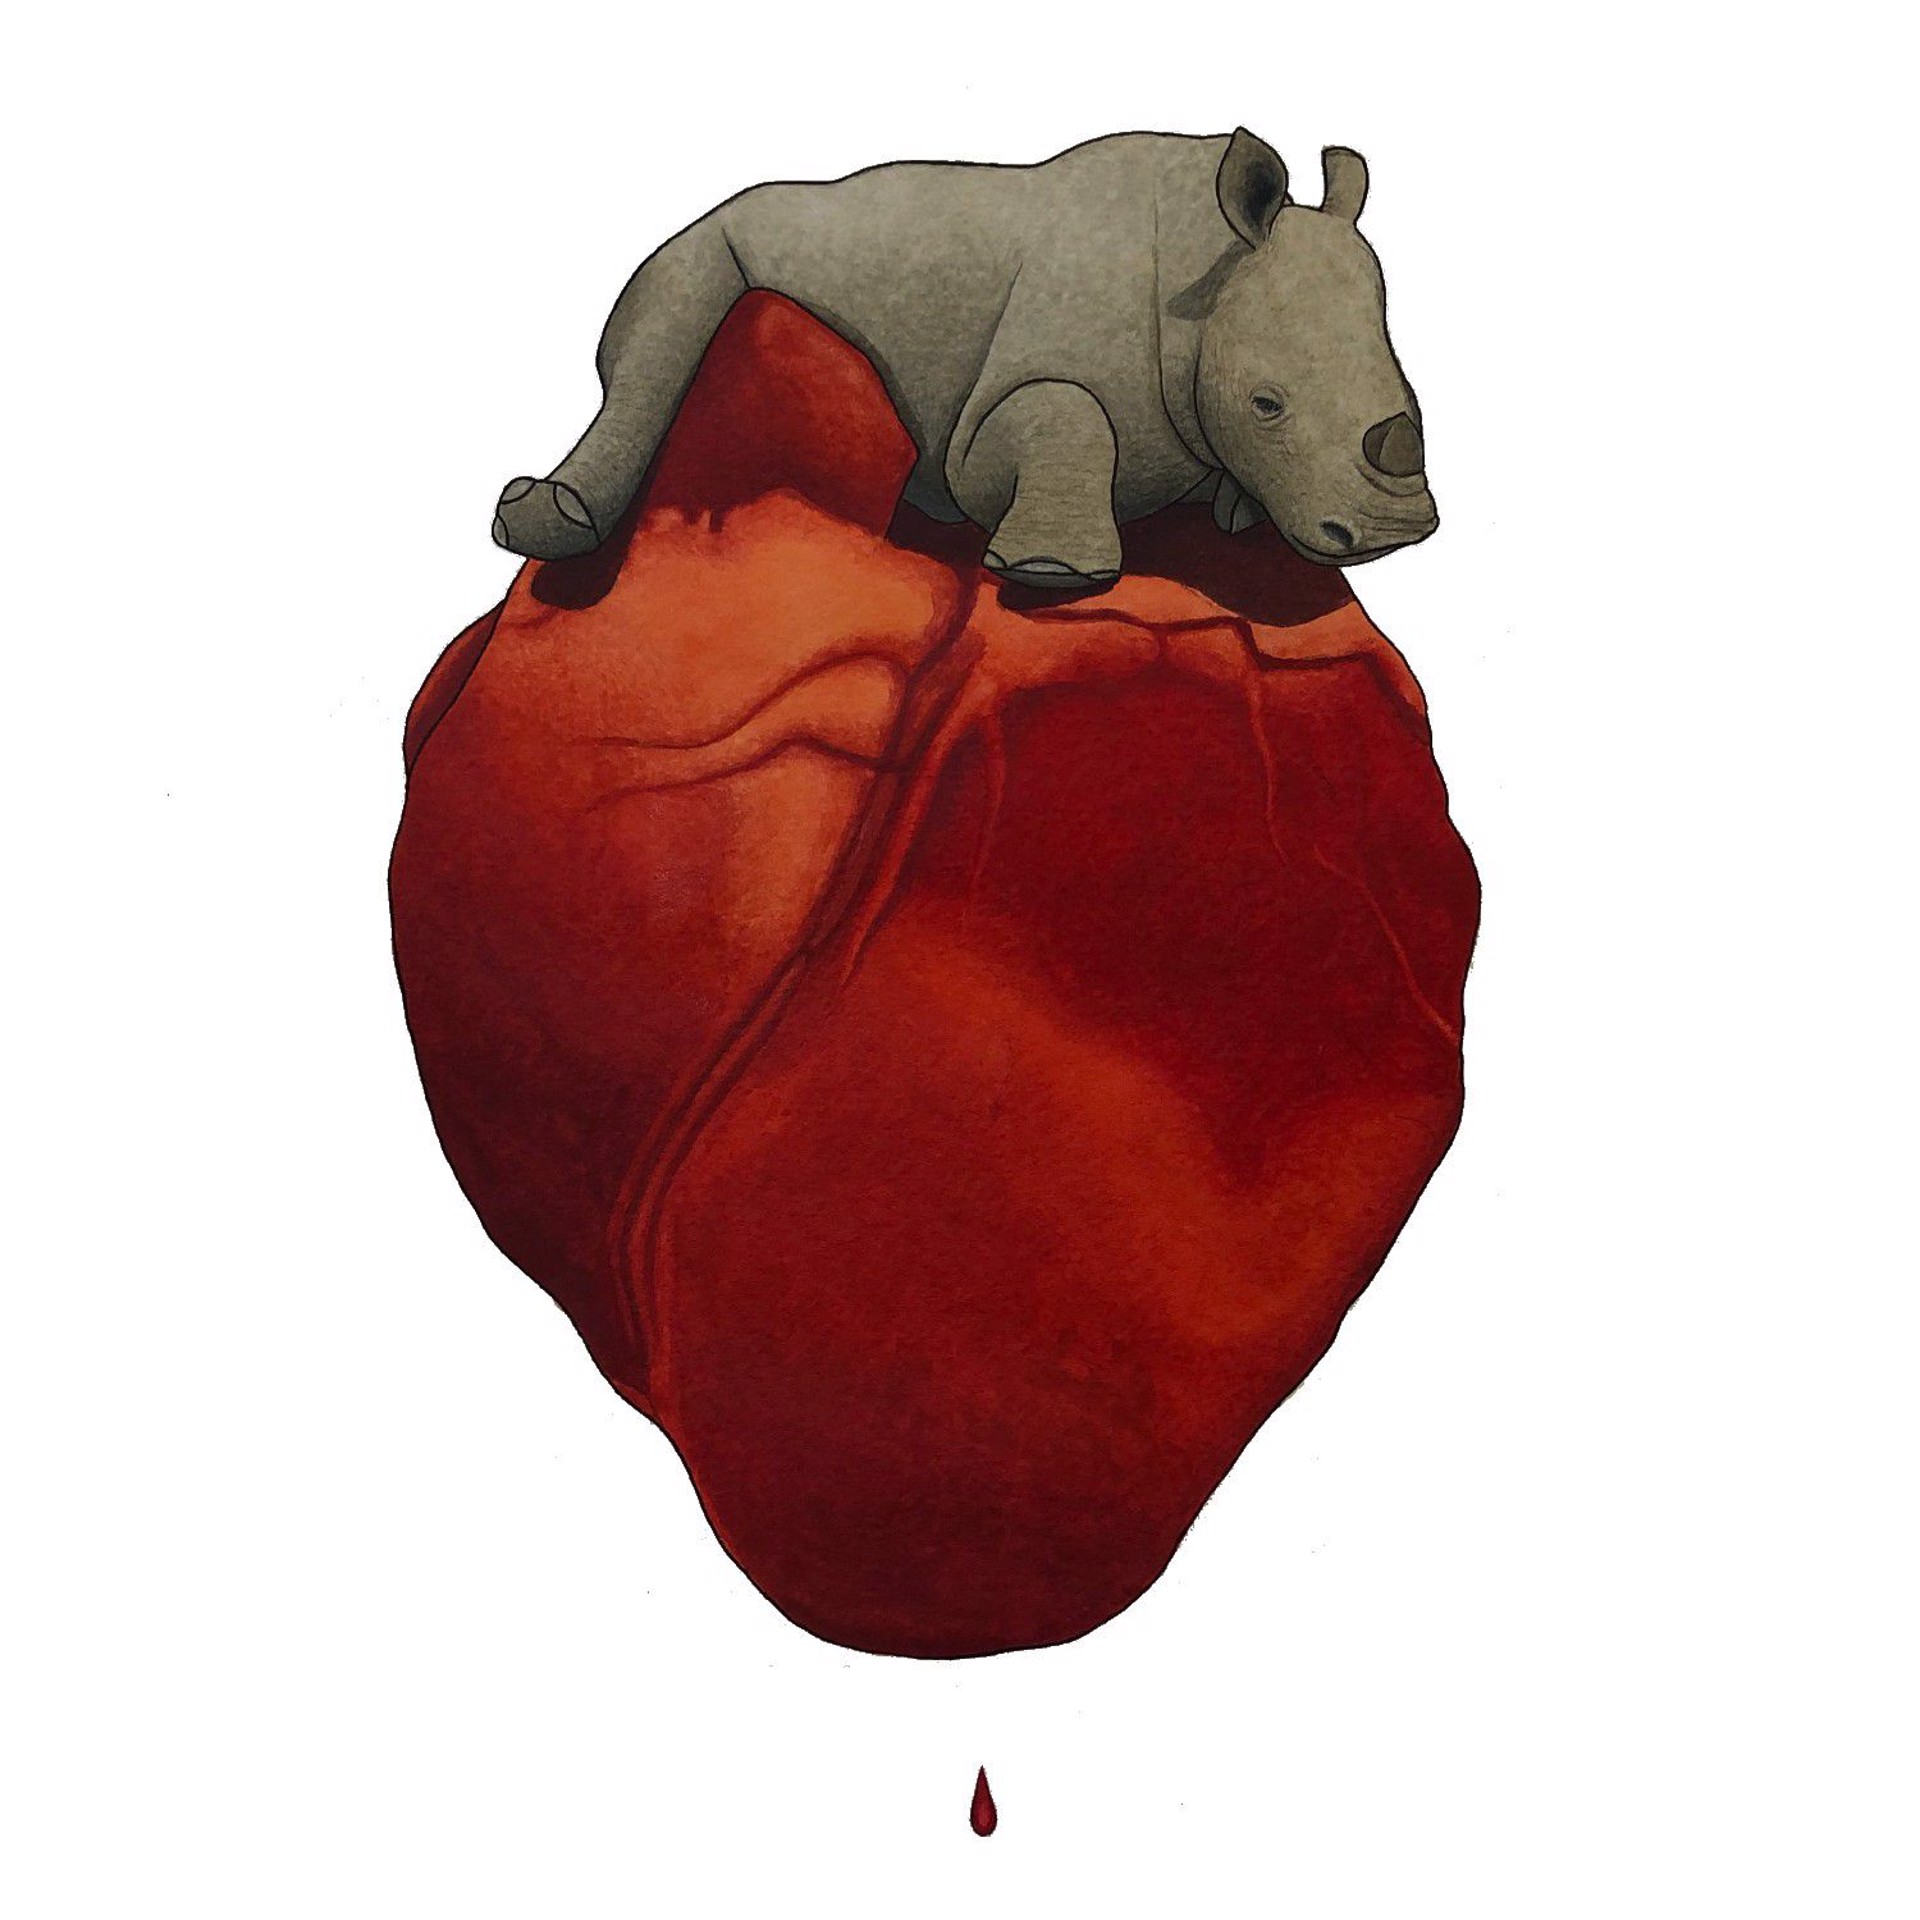 Overcoming a Heavy Heart by Daniel Angeles